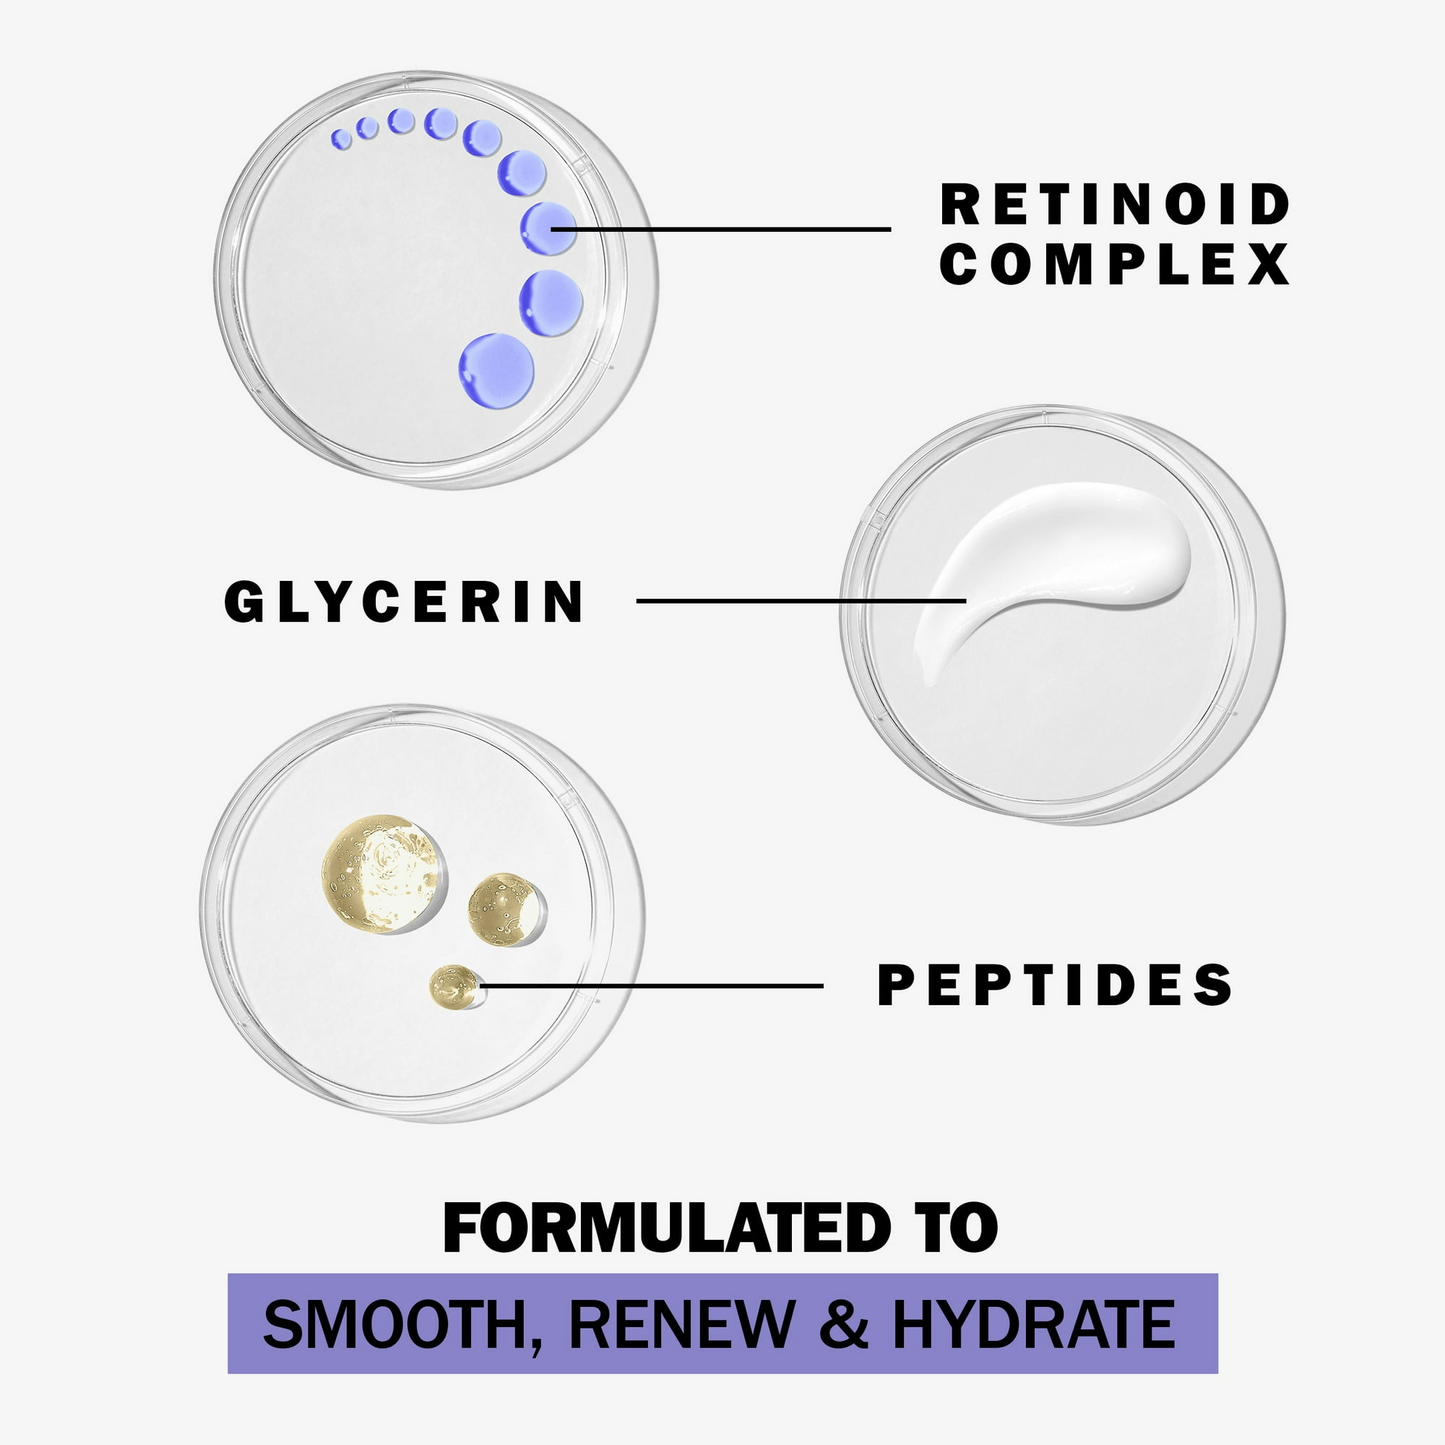 Olay Regenerist Retinol & Peptide Night Face Moisturizer, Anti-Aging Cream for All Skins, 1.7 fl oz